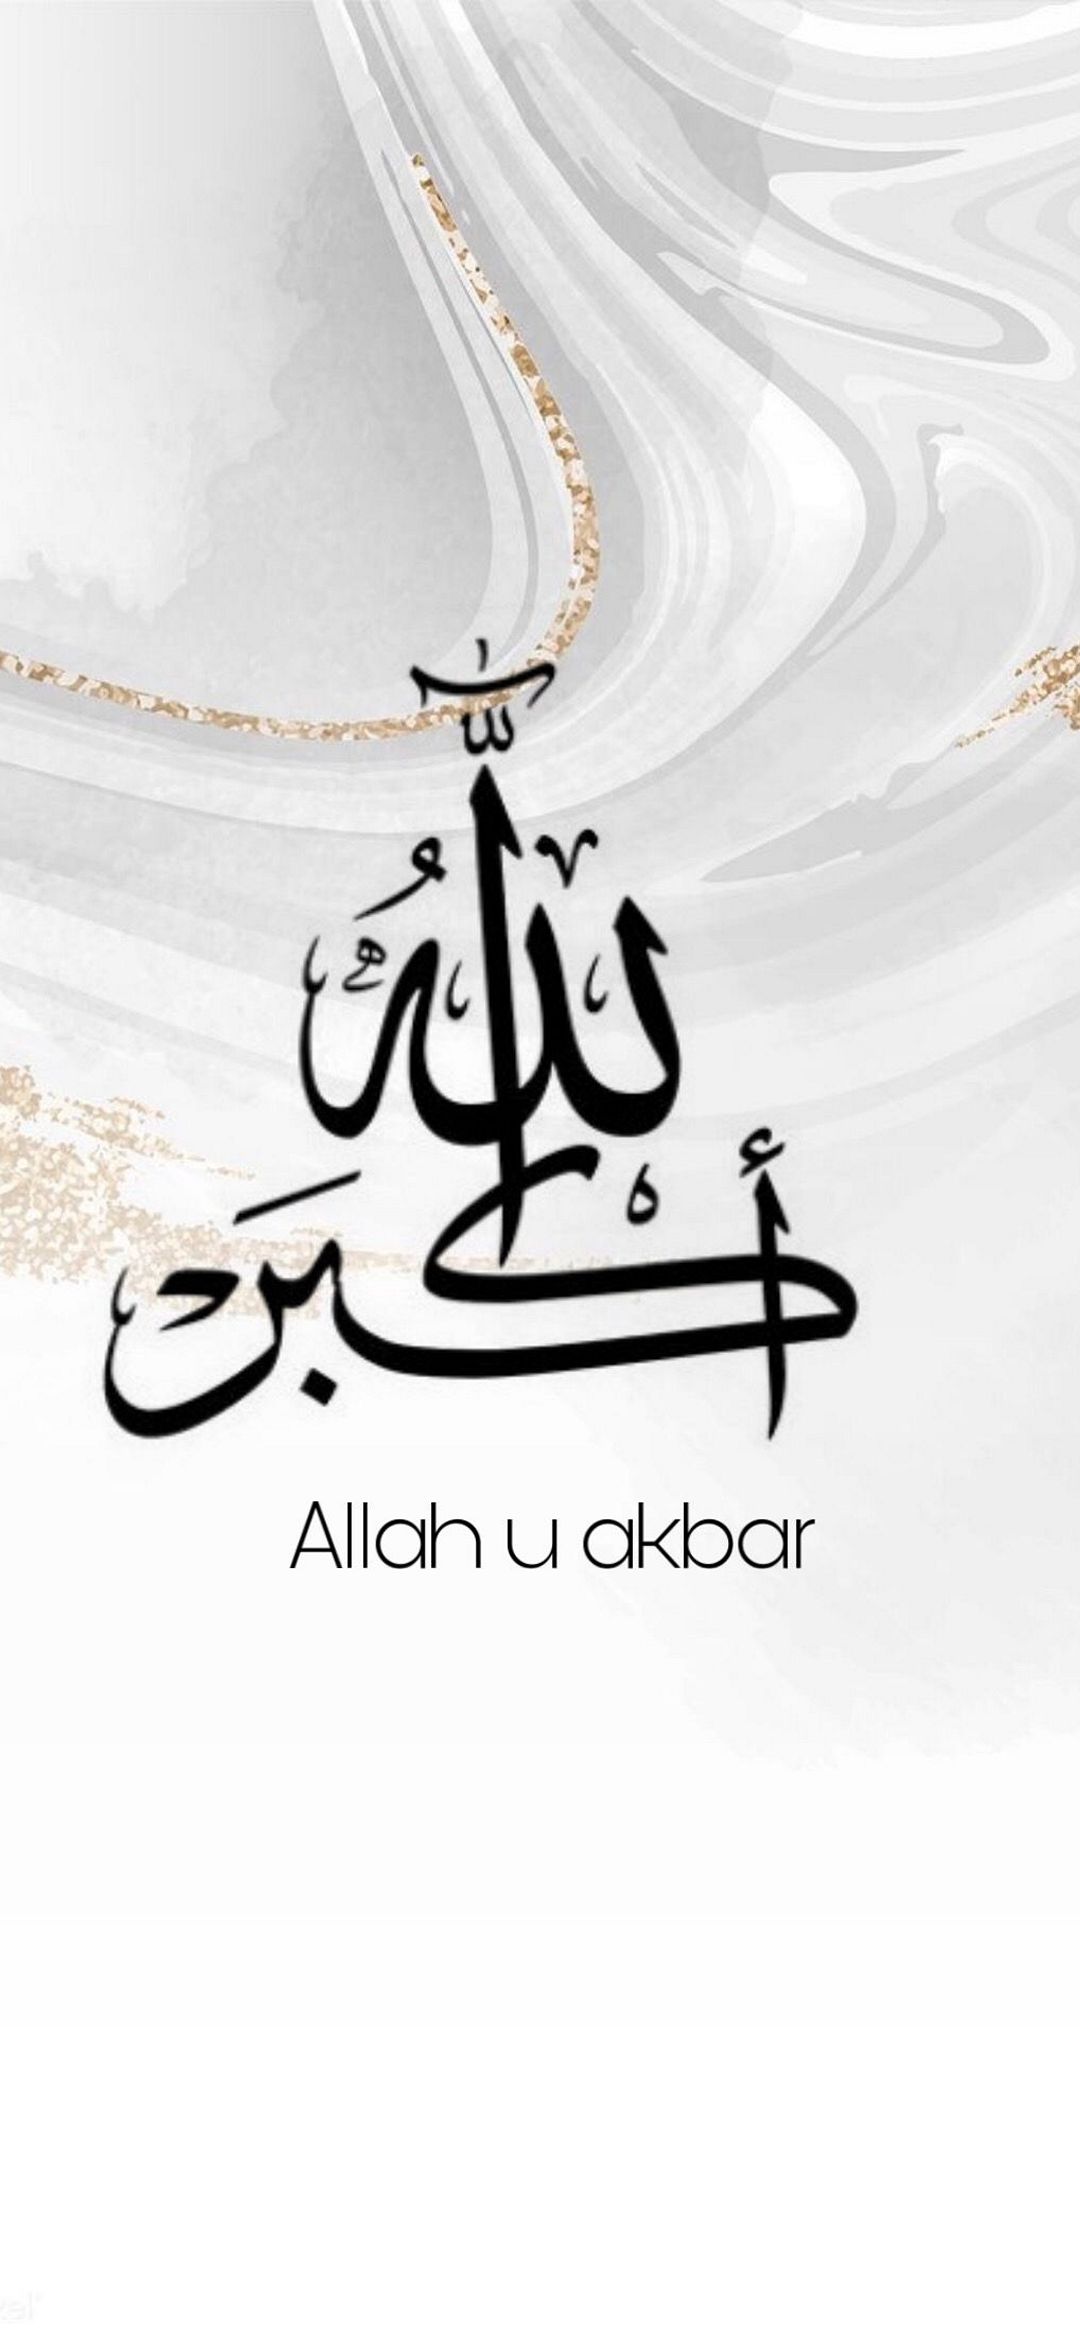 Allahu Akbar wallpaper by Hashi24  Download on ZEDGE  1cf3